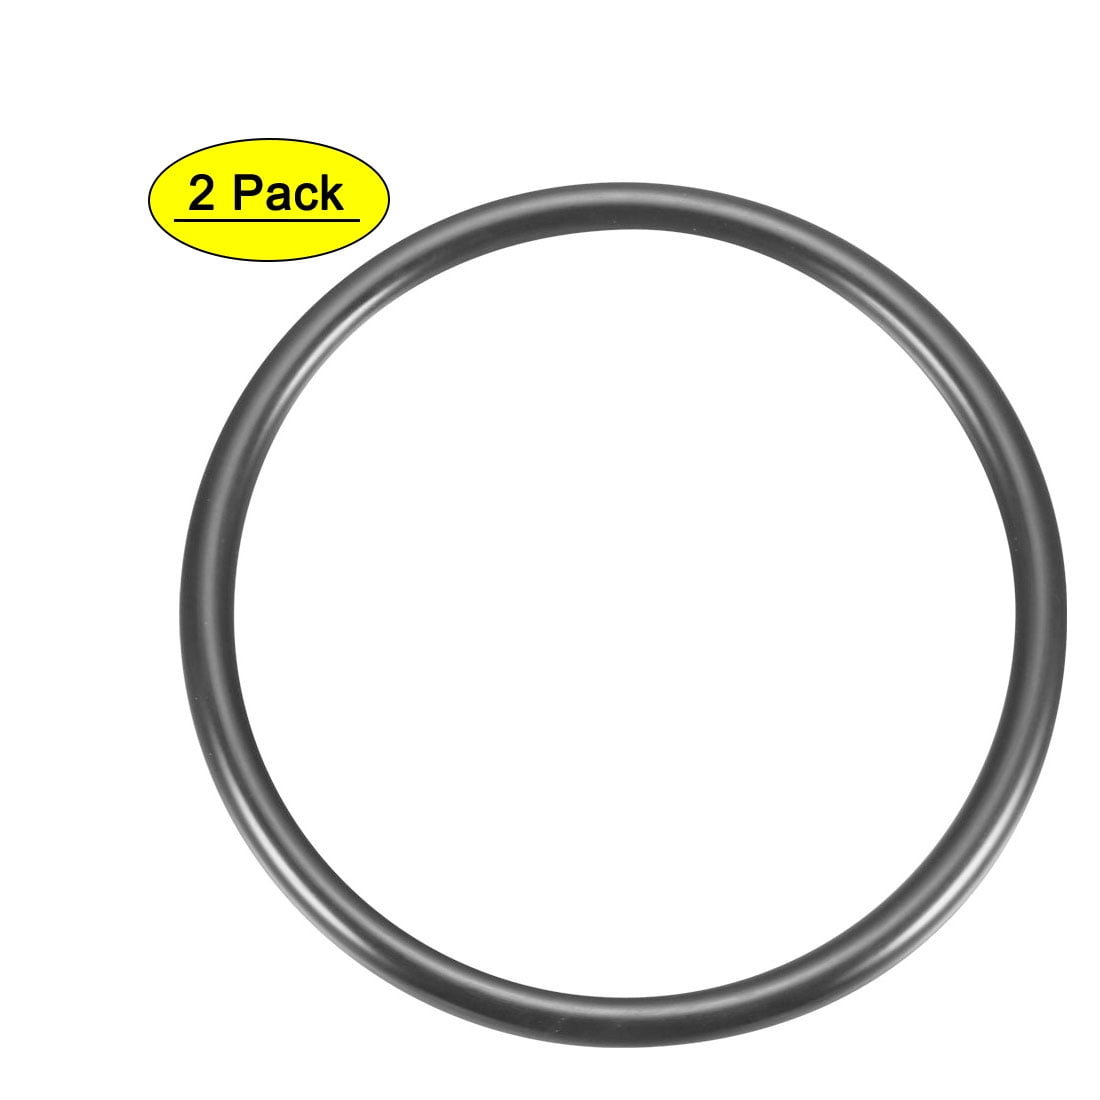 Black Universal O-Ring 240mm x 8.6mm BUNA-N Material Oil Seal Washers  Grommets - Walmart.ca